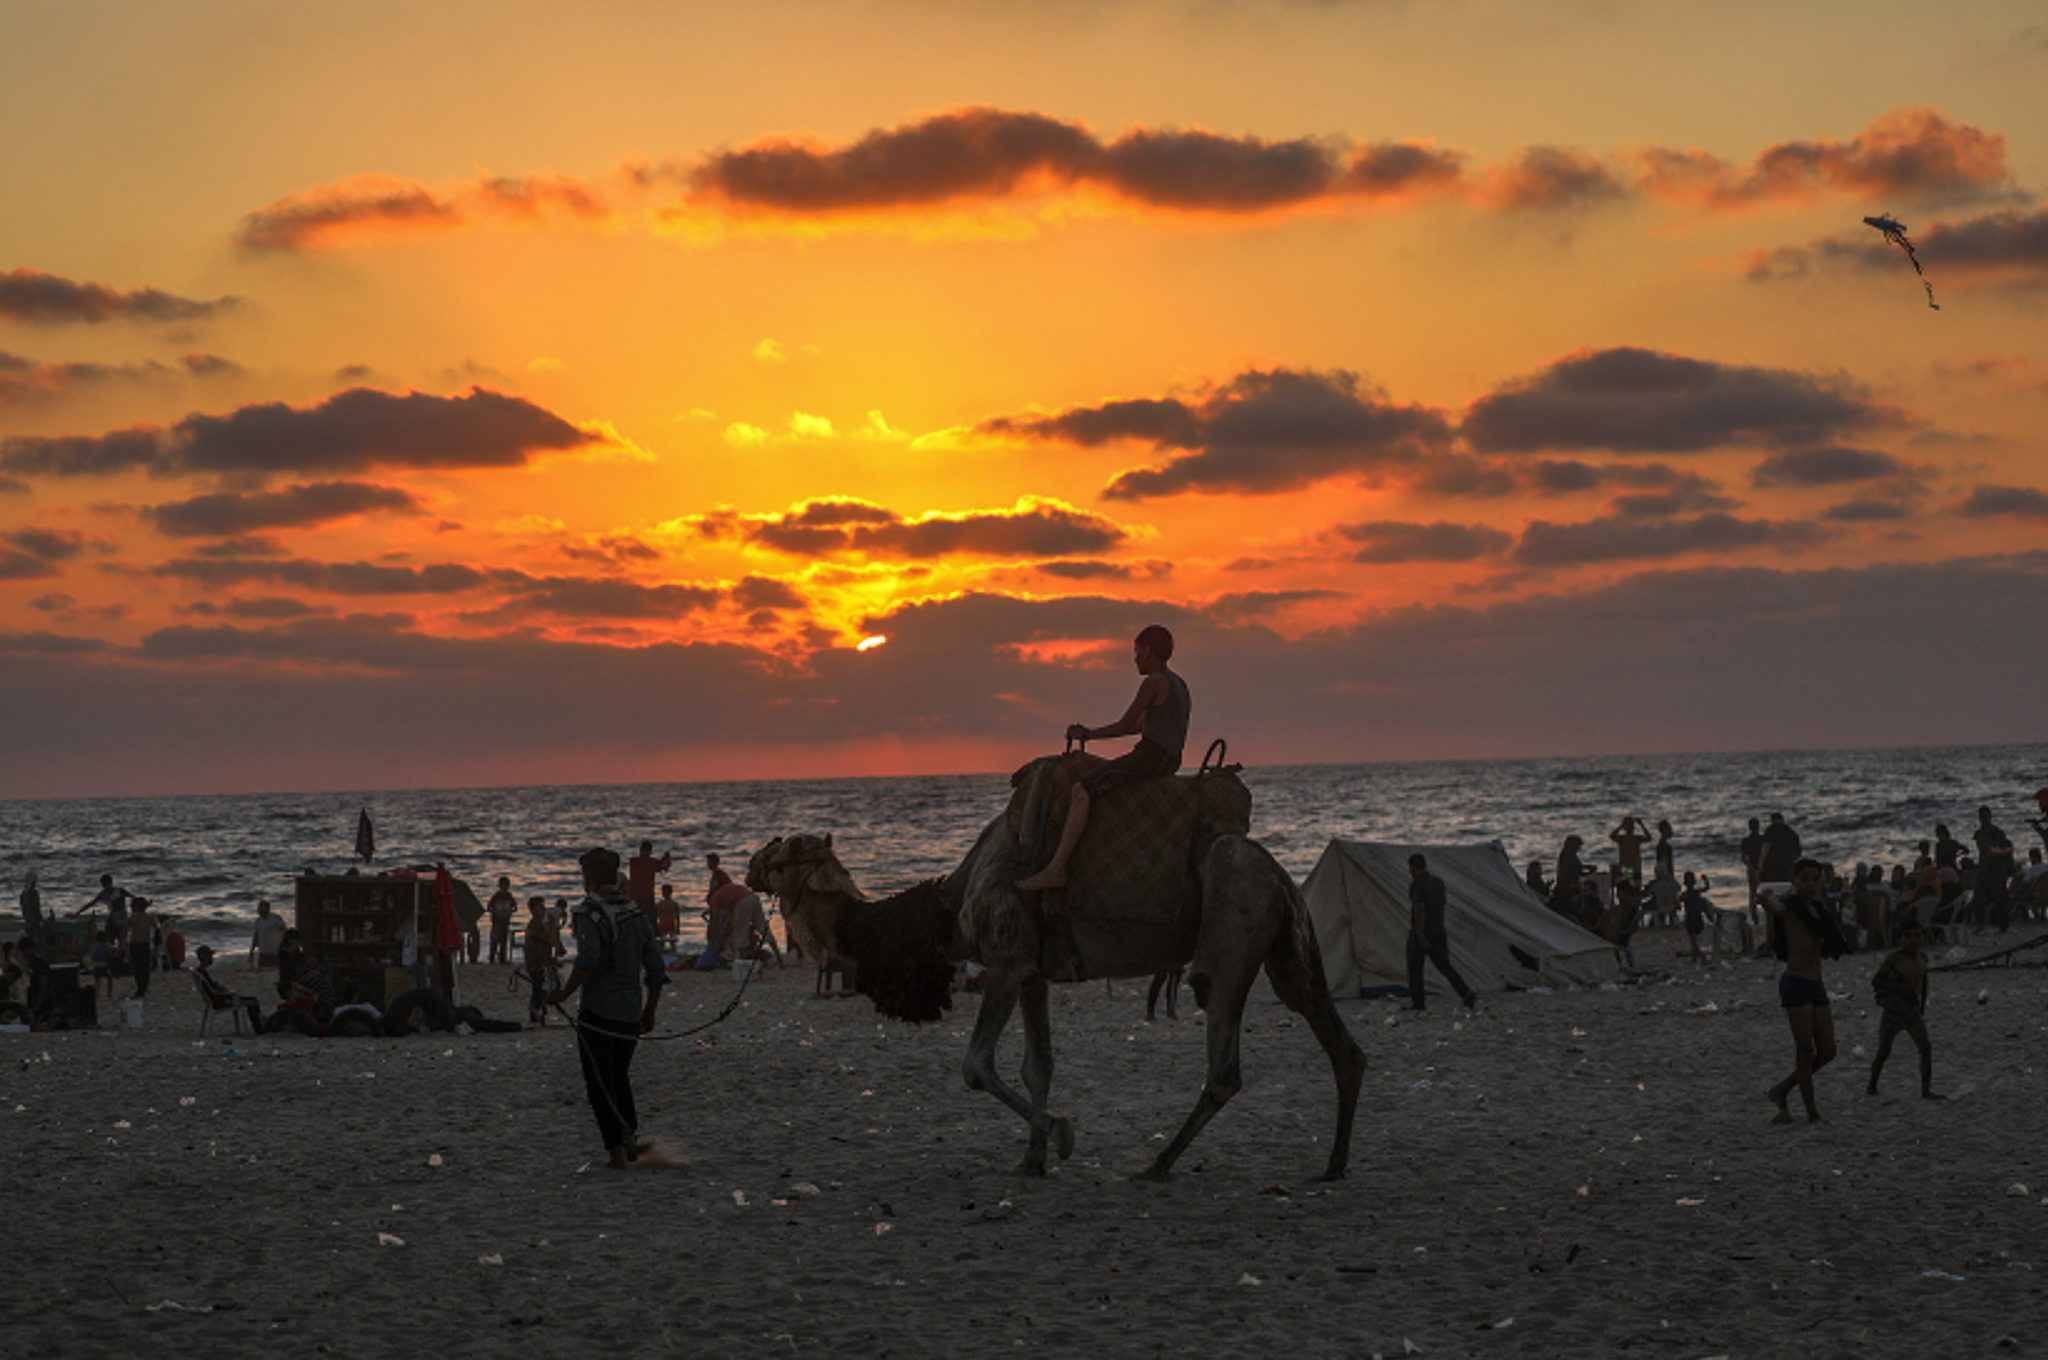  Zachód słońca nad Morzem Śródziemnym, Stefa Gazy, fot. EPA / MOHAMMED SABER